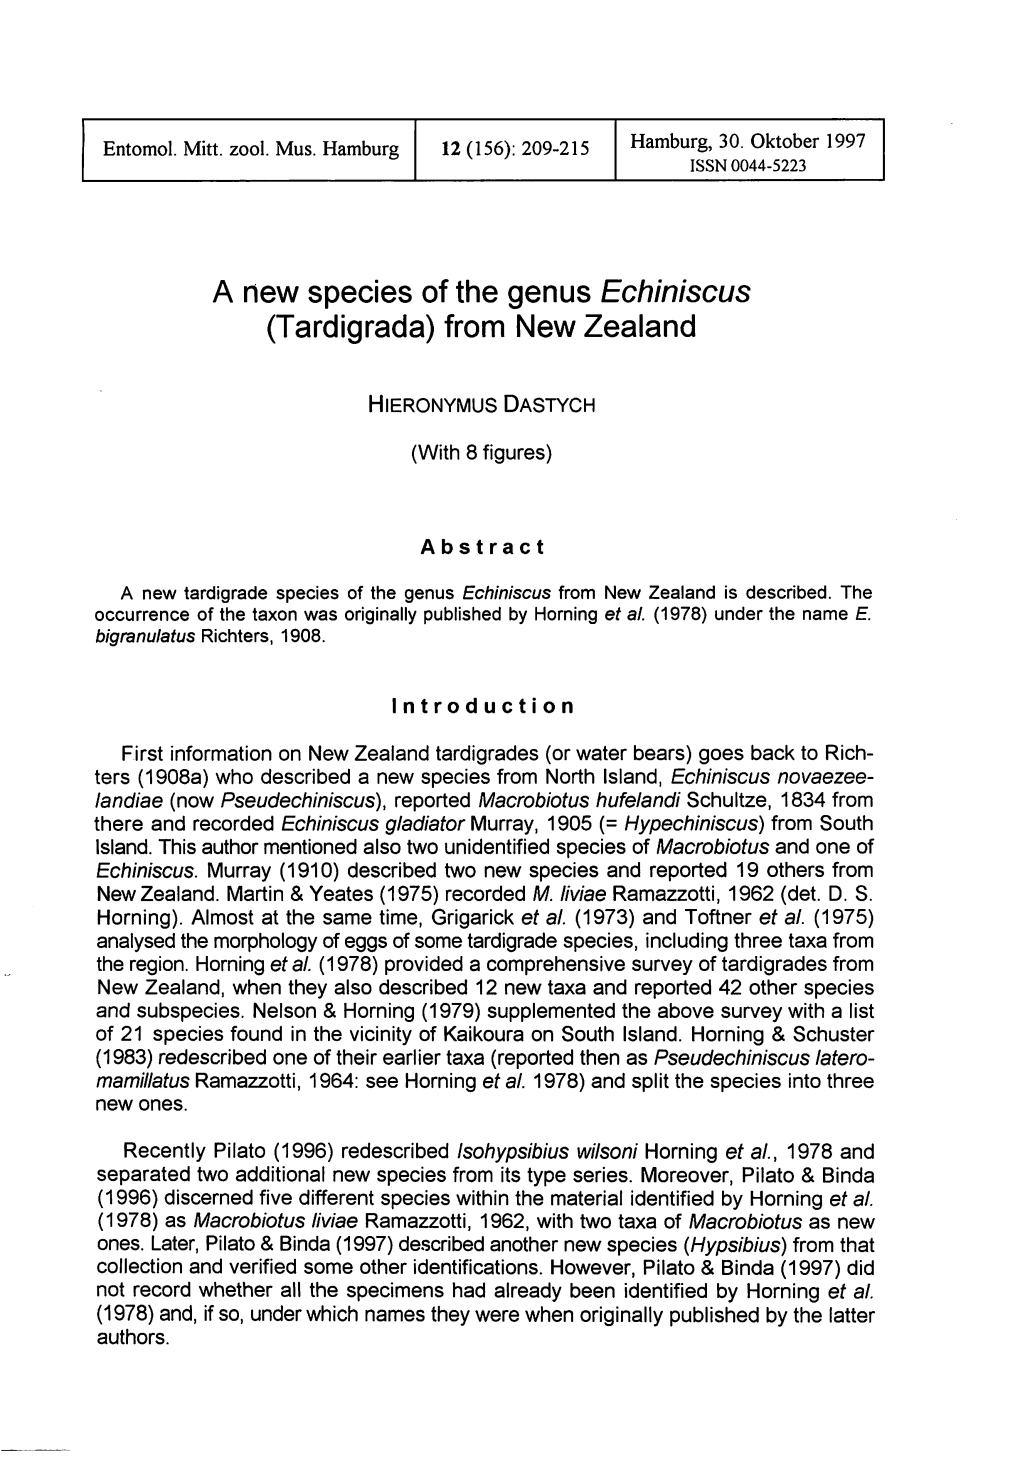 A New Species of the Genus Echiniscus (Tardigrada) from New Zealand